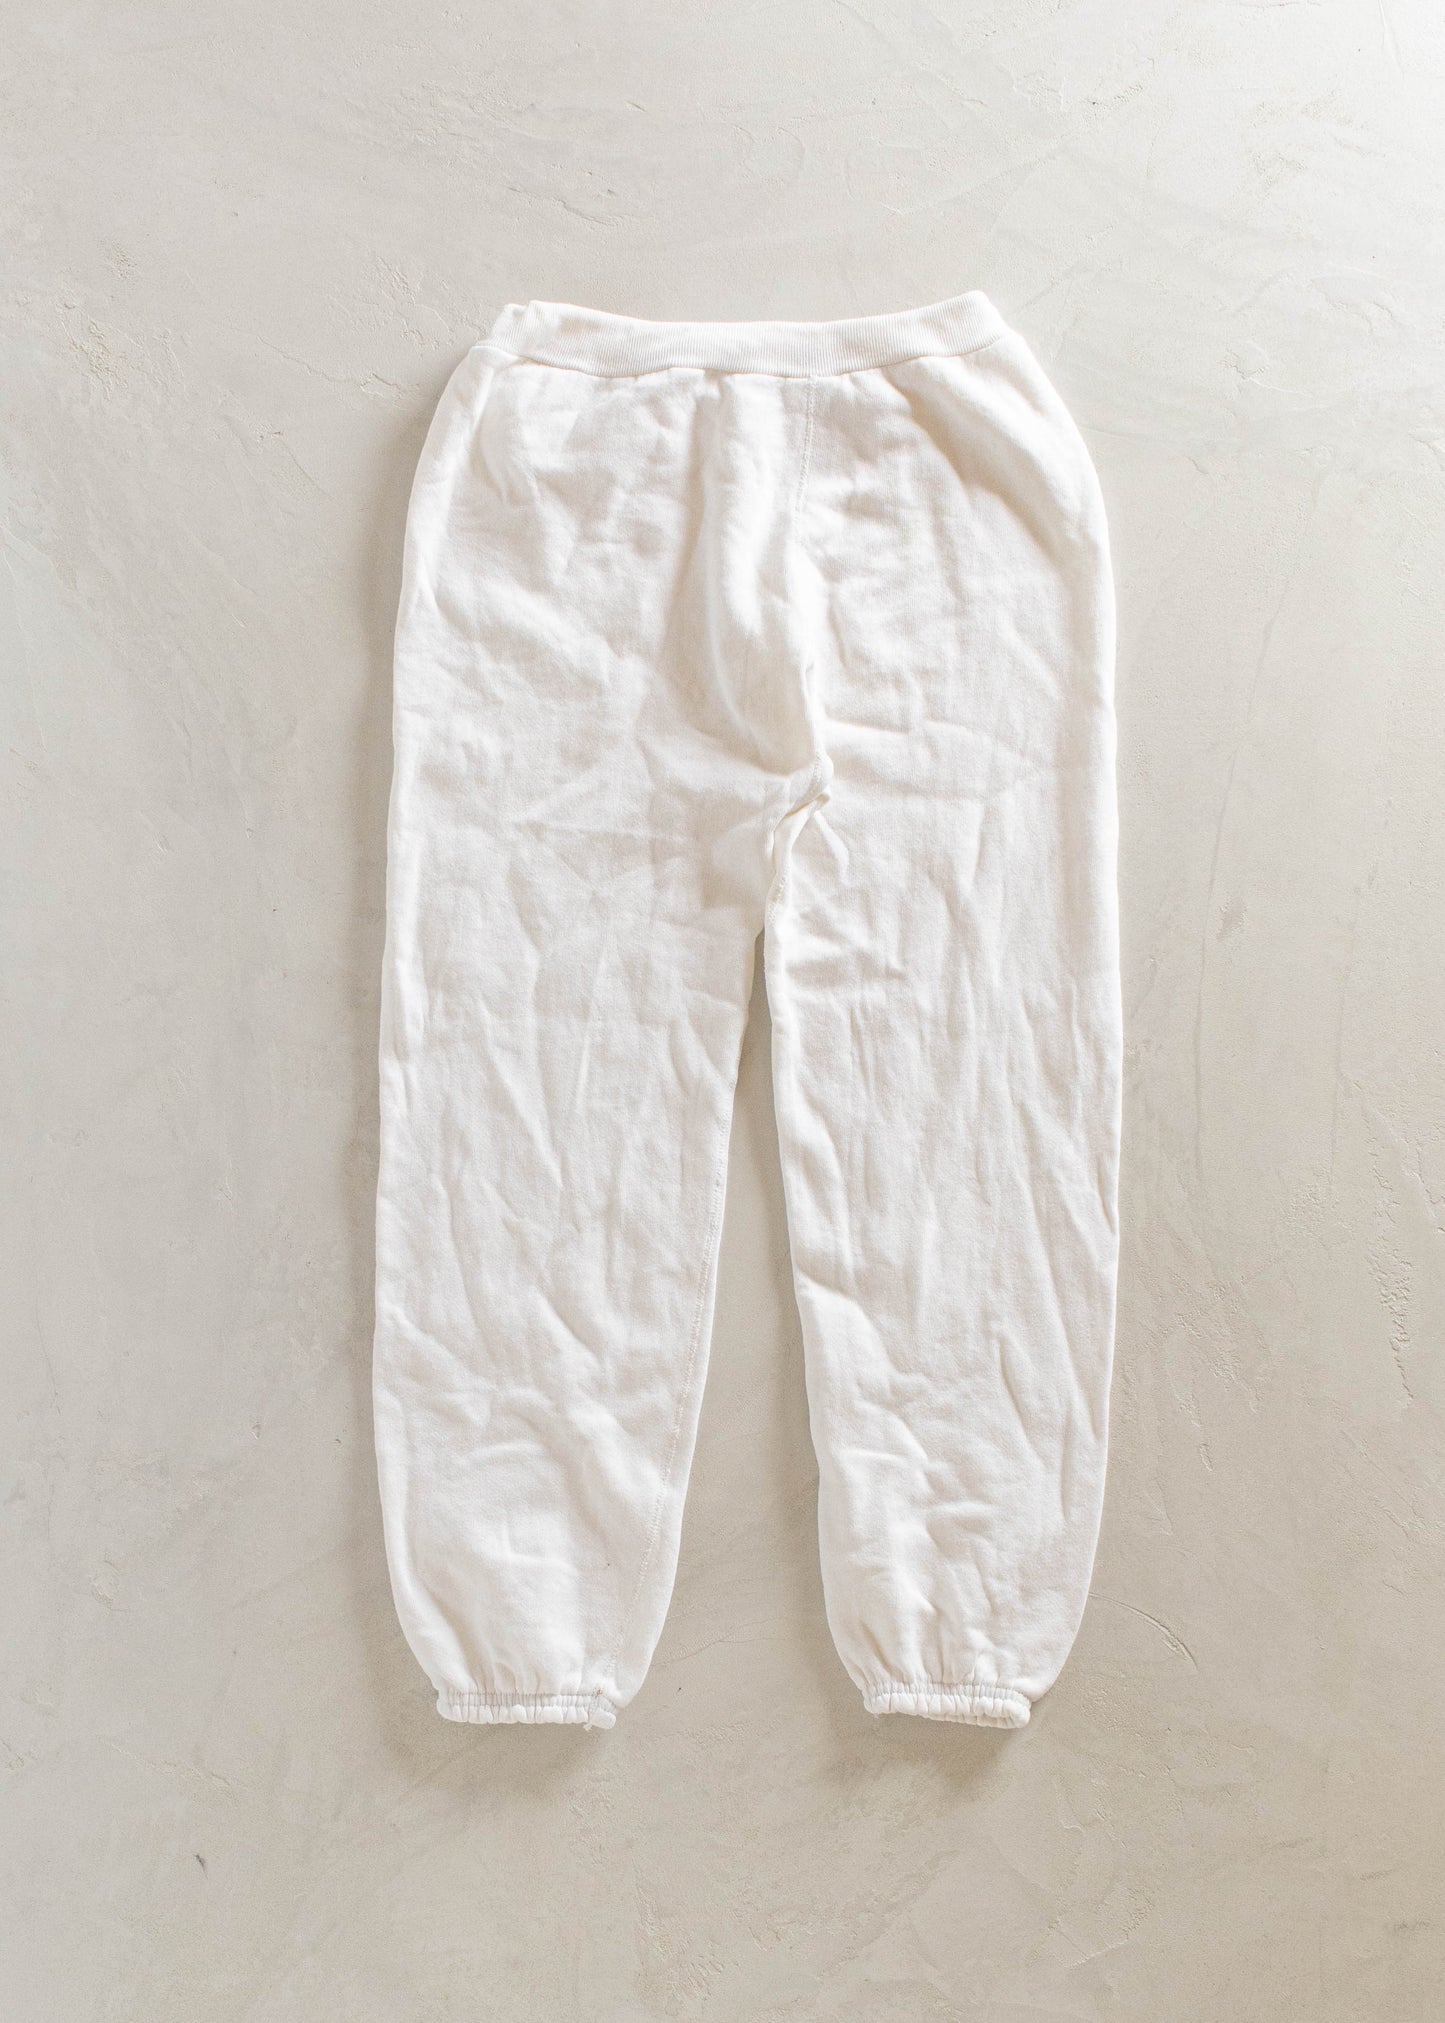 1990s Tultex Drawstring Sweatpants Size S/M